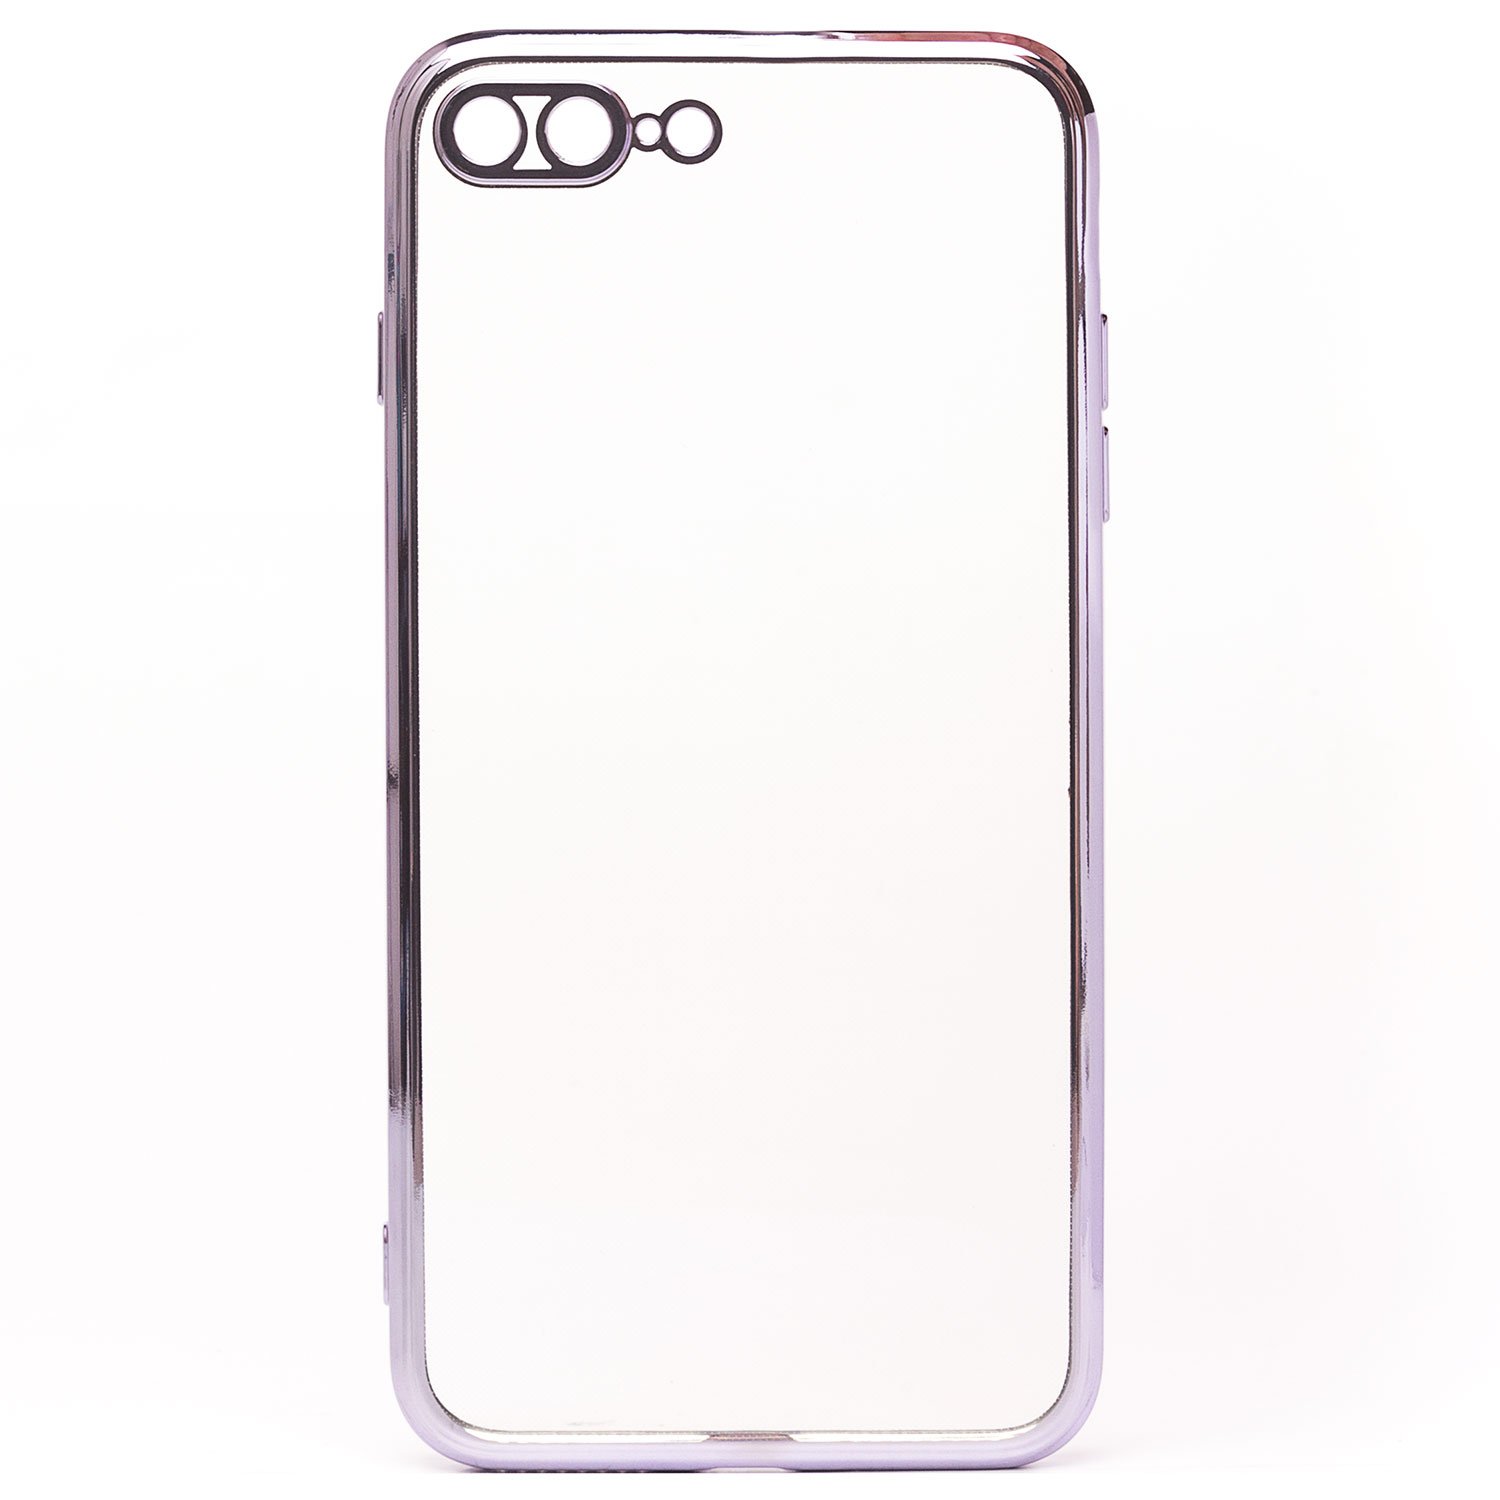 Чехол-накладка SC215 для смартфона Apple iPhone 7 Plus/iPhone 8 Plus, прозрачный/розовый (126484), цвет прозрачный/розовый